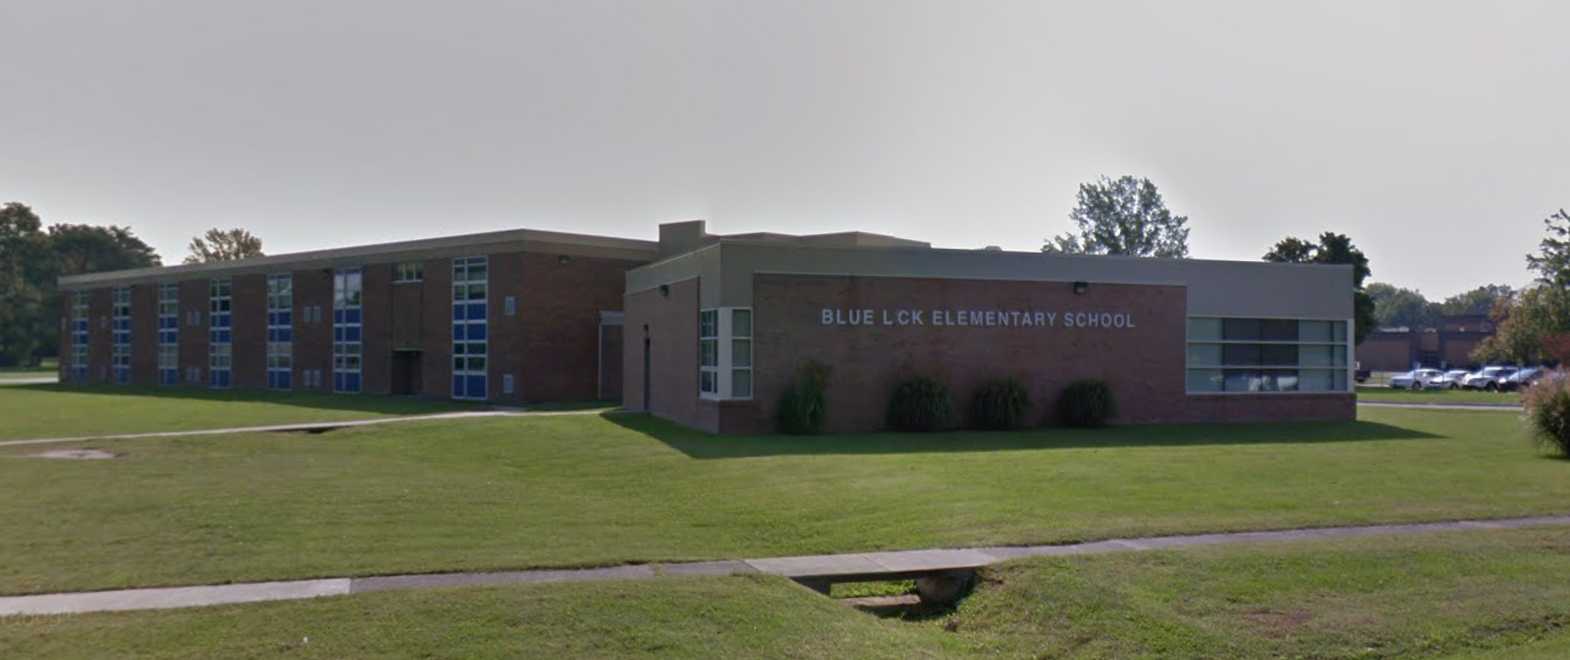 Blue Lick Elementary